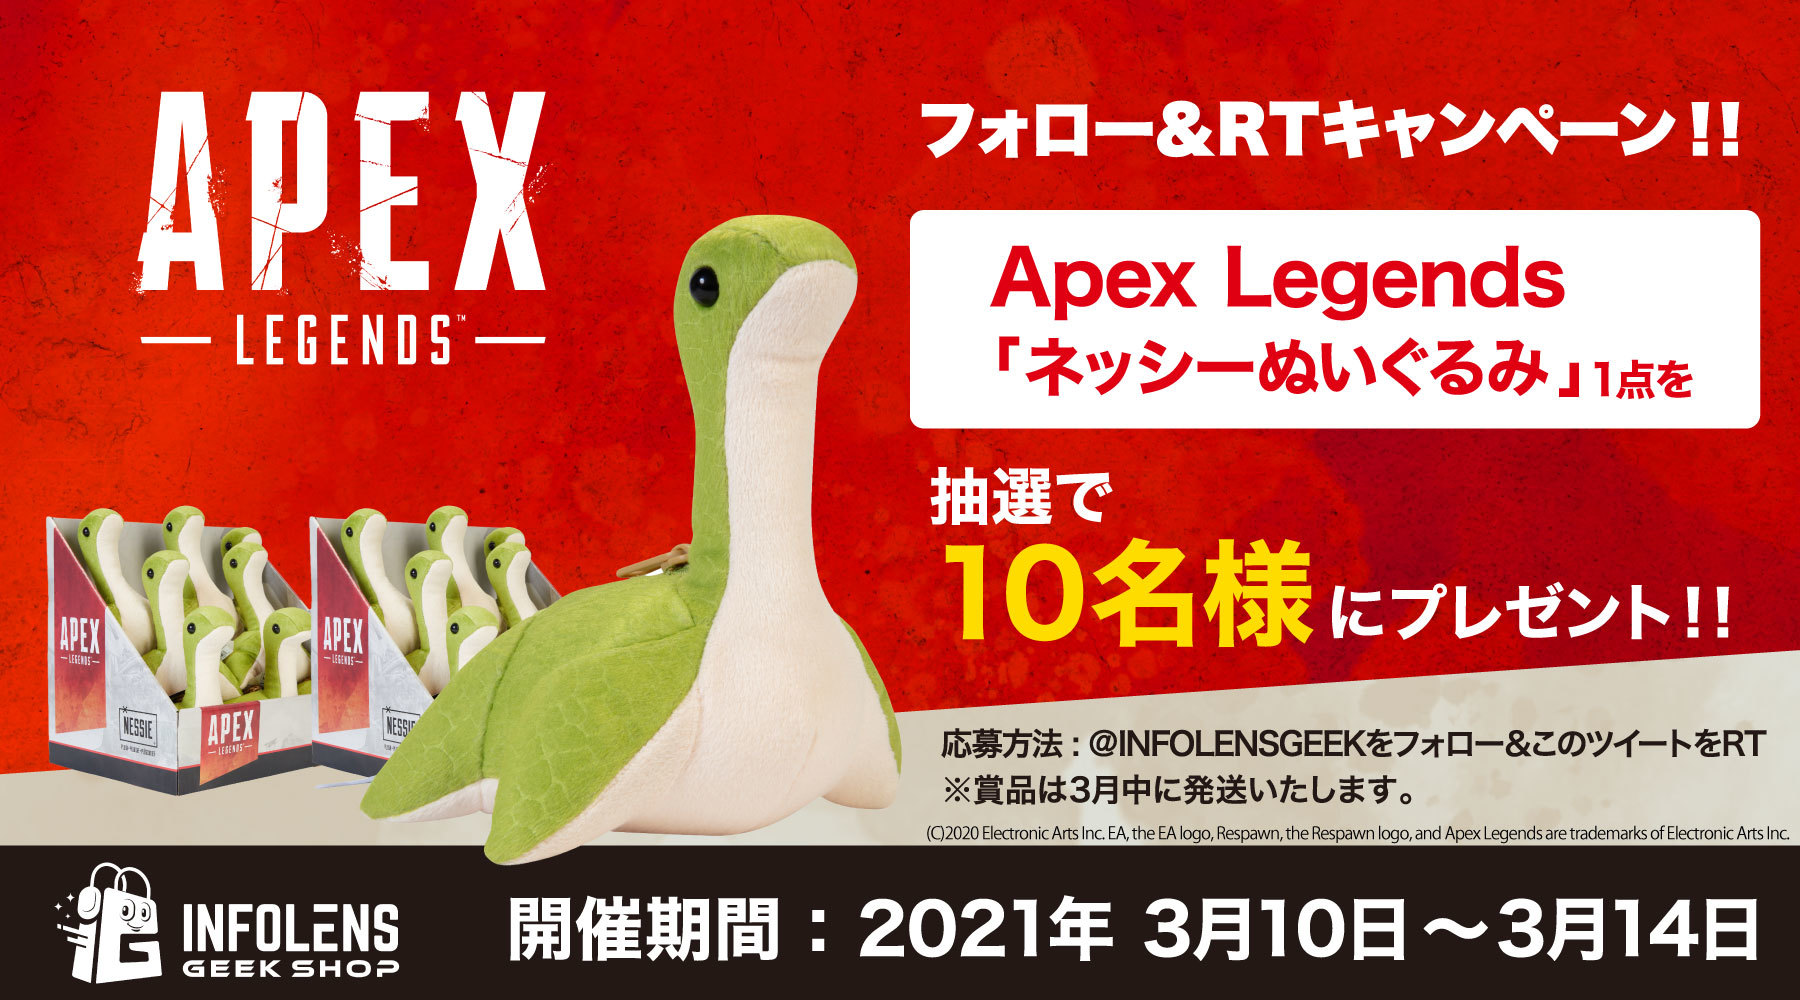 『Apex Legends』のNintendo Switch版発売&再販決定記念！
ネッシーぬいぐるみのプレゼントキャンペーンを開催！